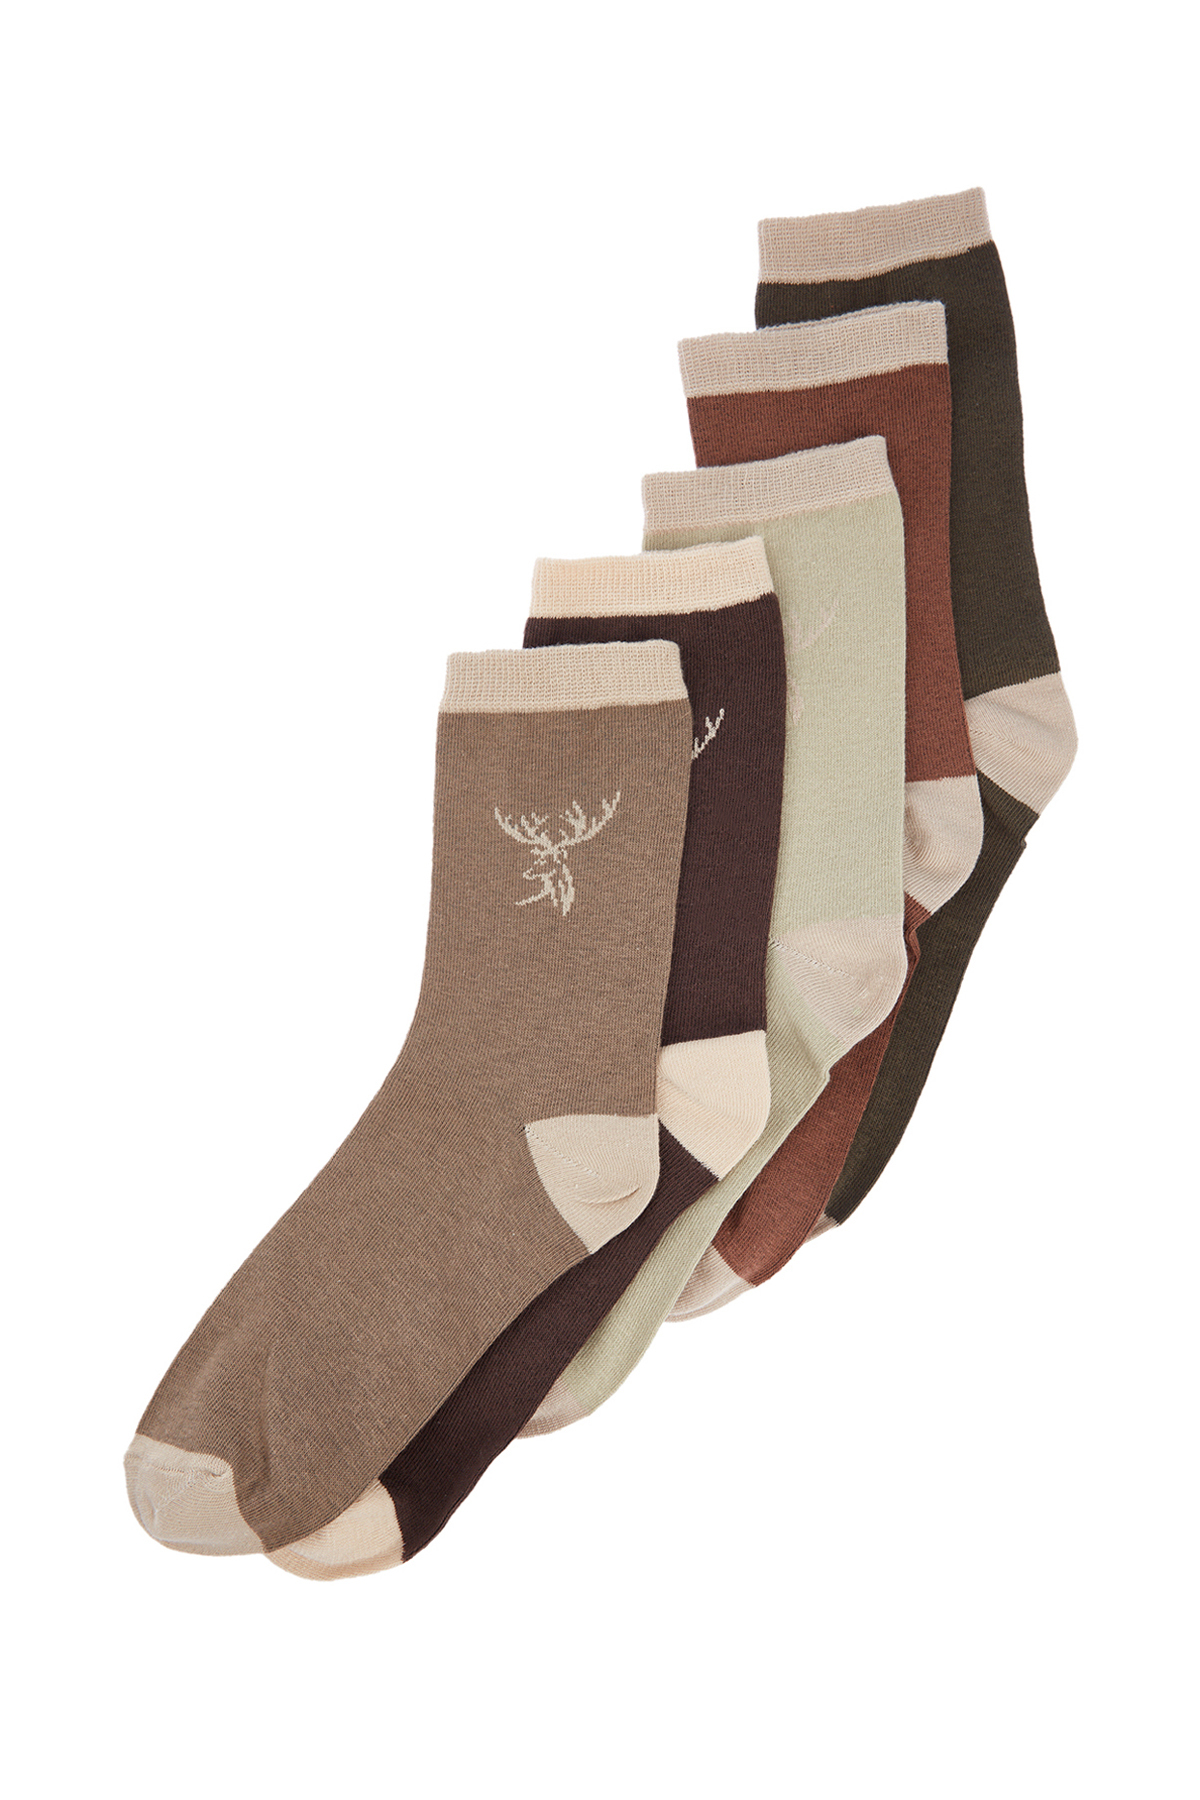 Trendyol Men's Multicolored Cotton 5 Pack Deer Patterned Socks